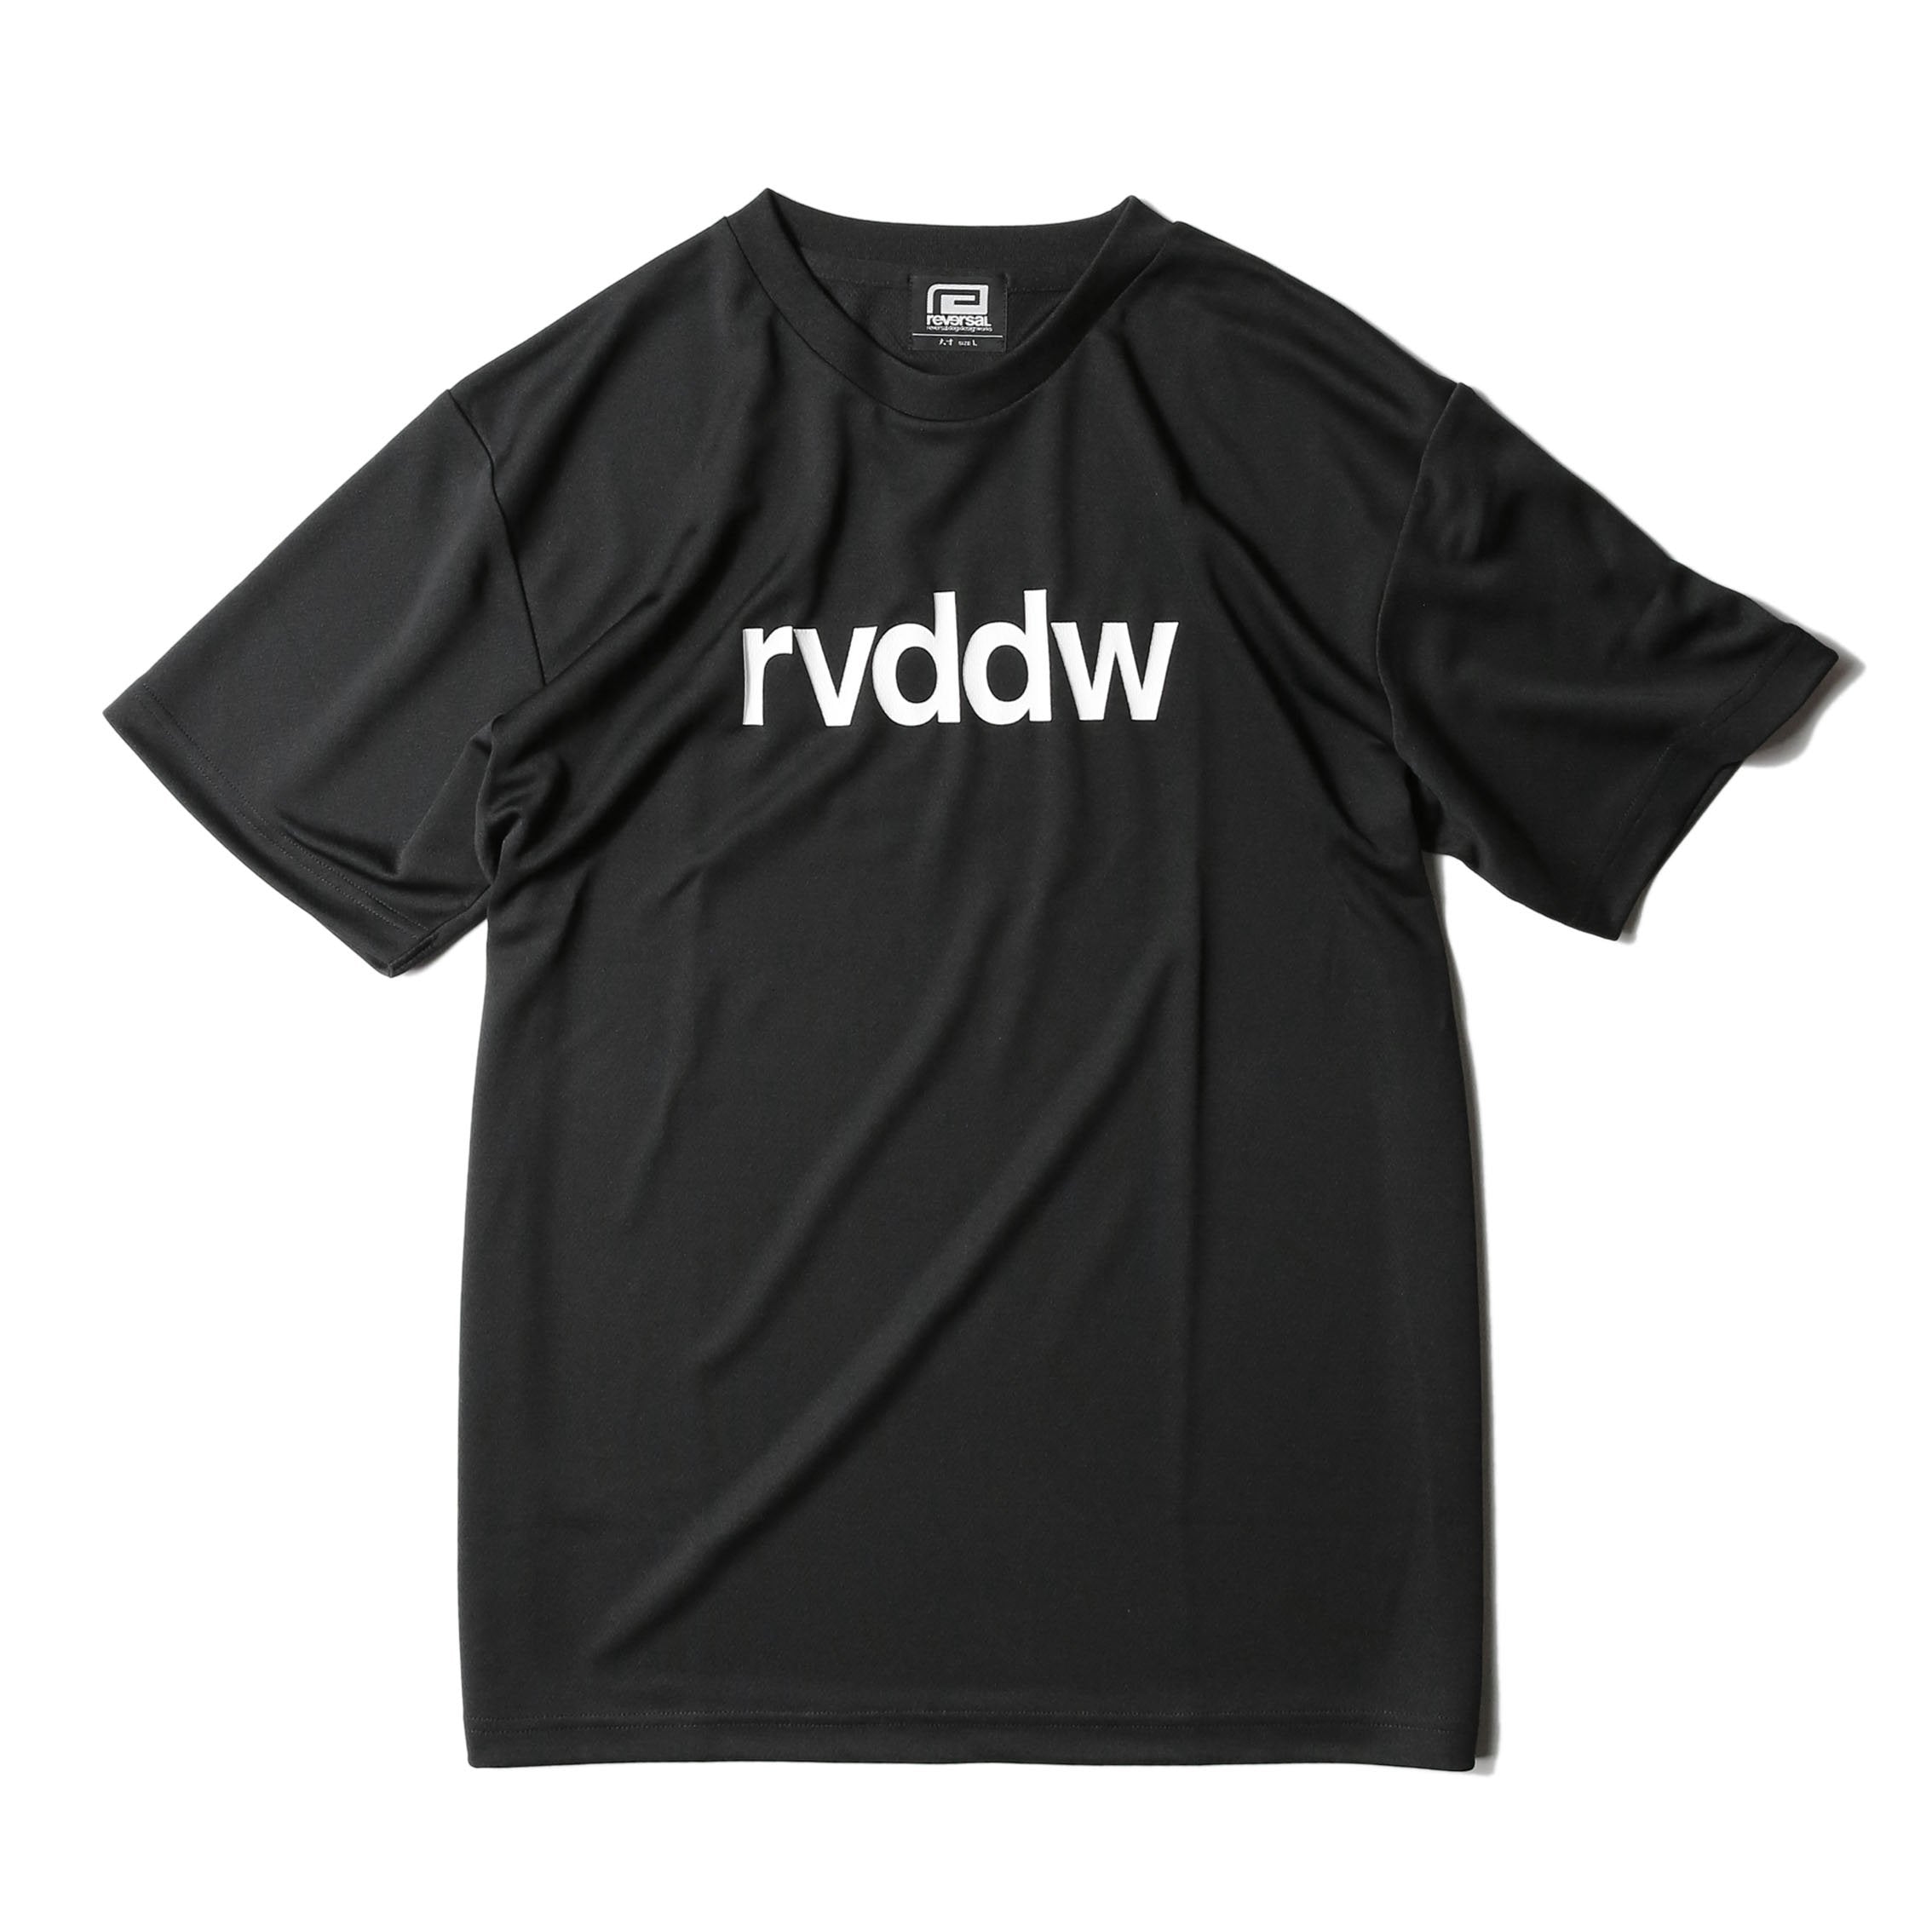 RVDDW Mesh T-Shirt-Reversal RVDDW-ChokeSports